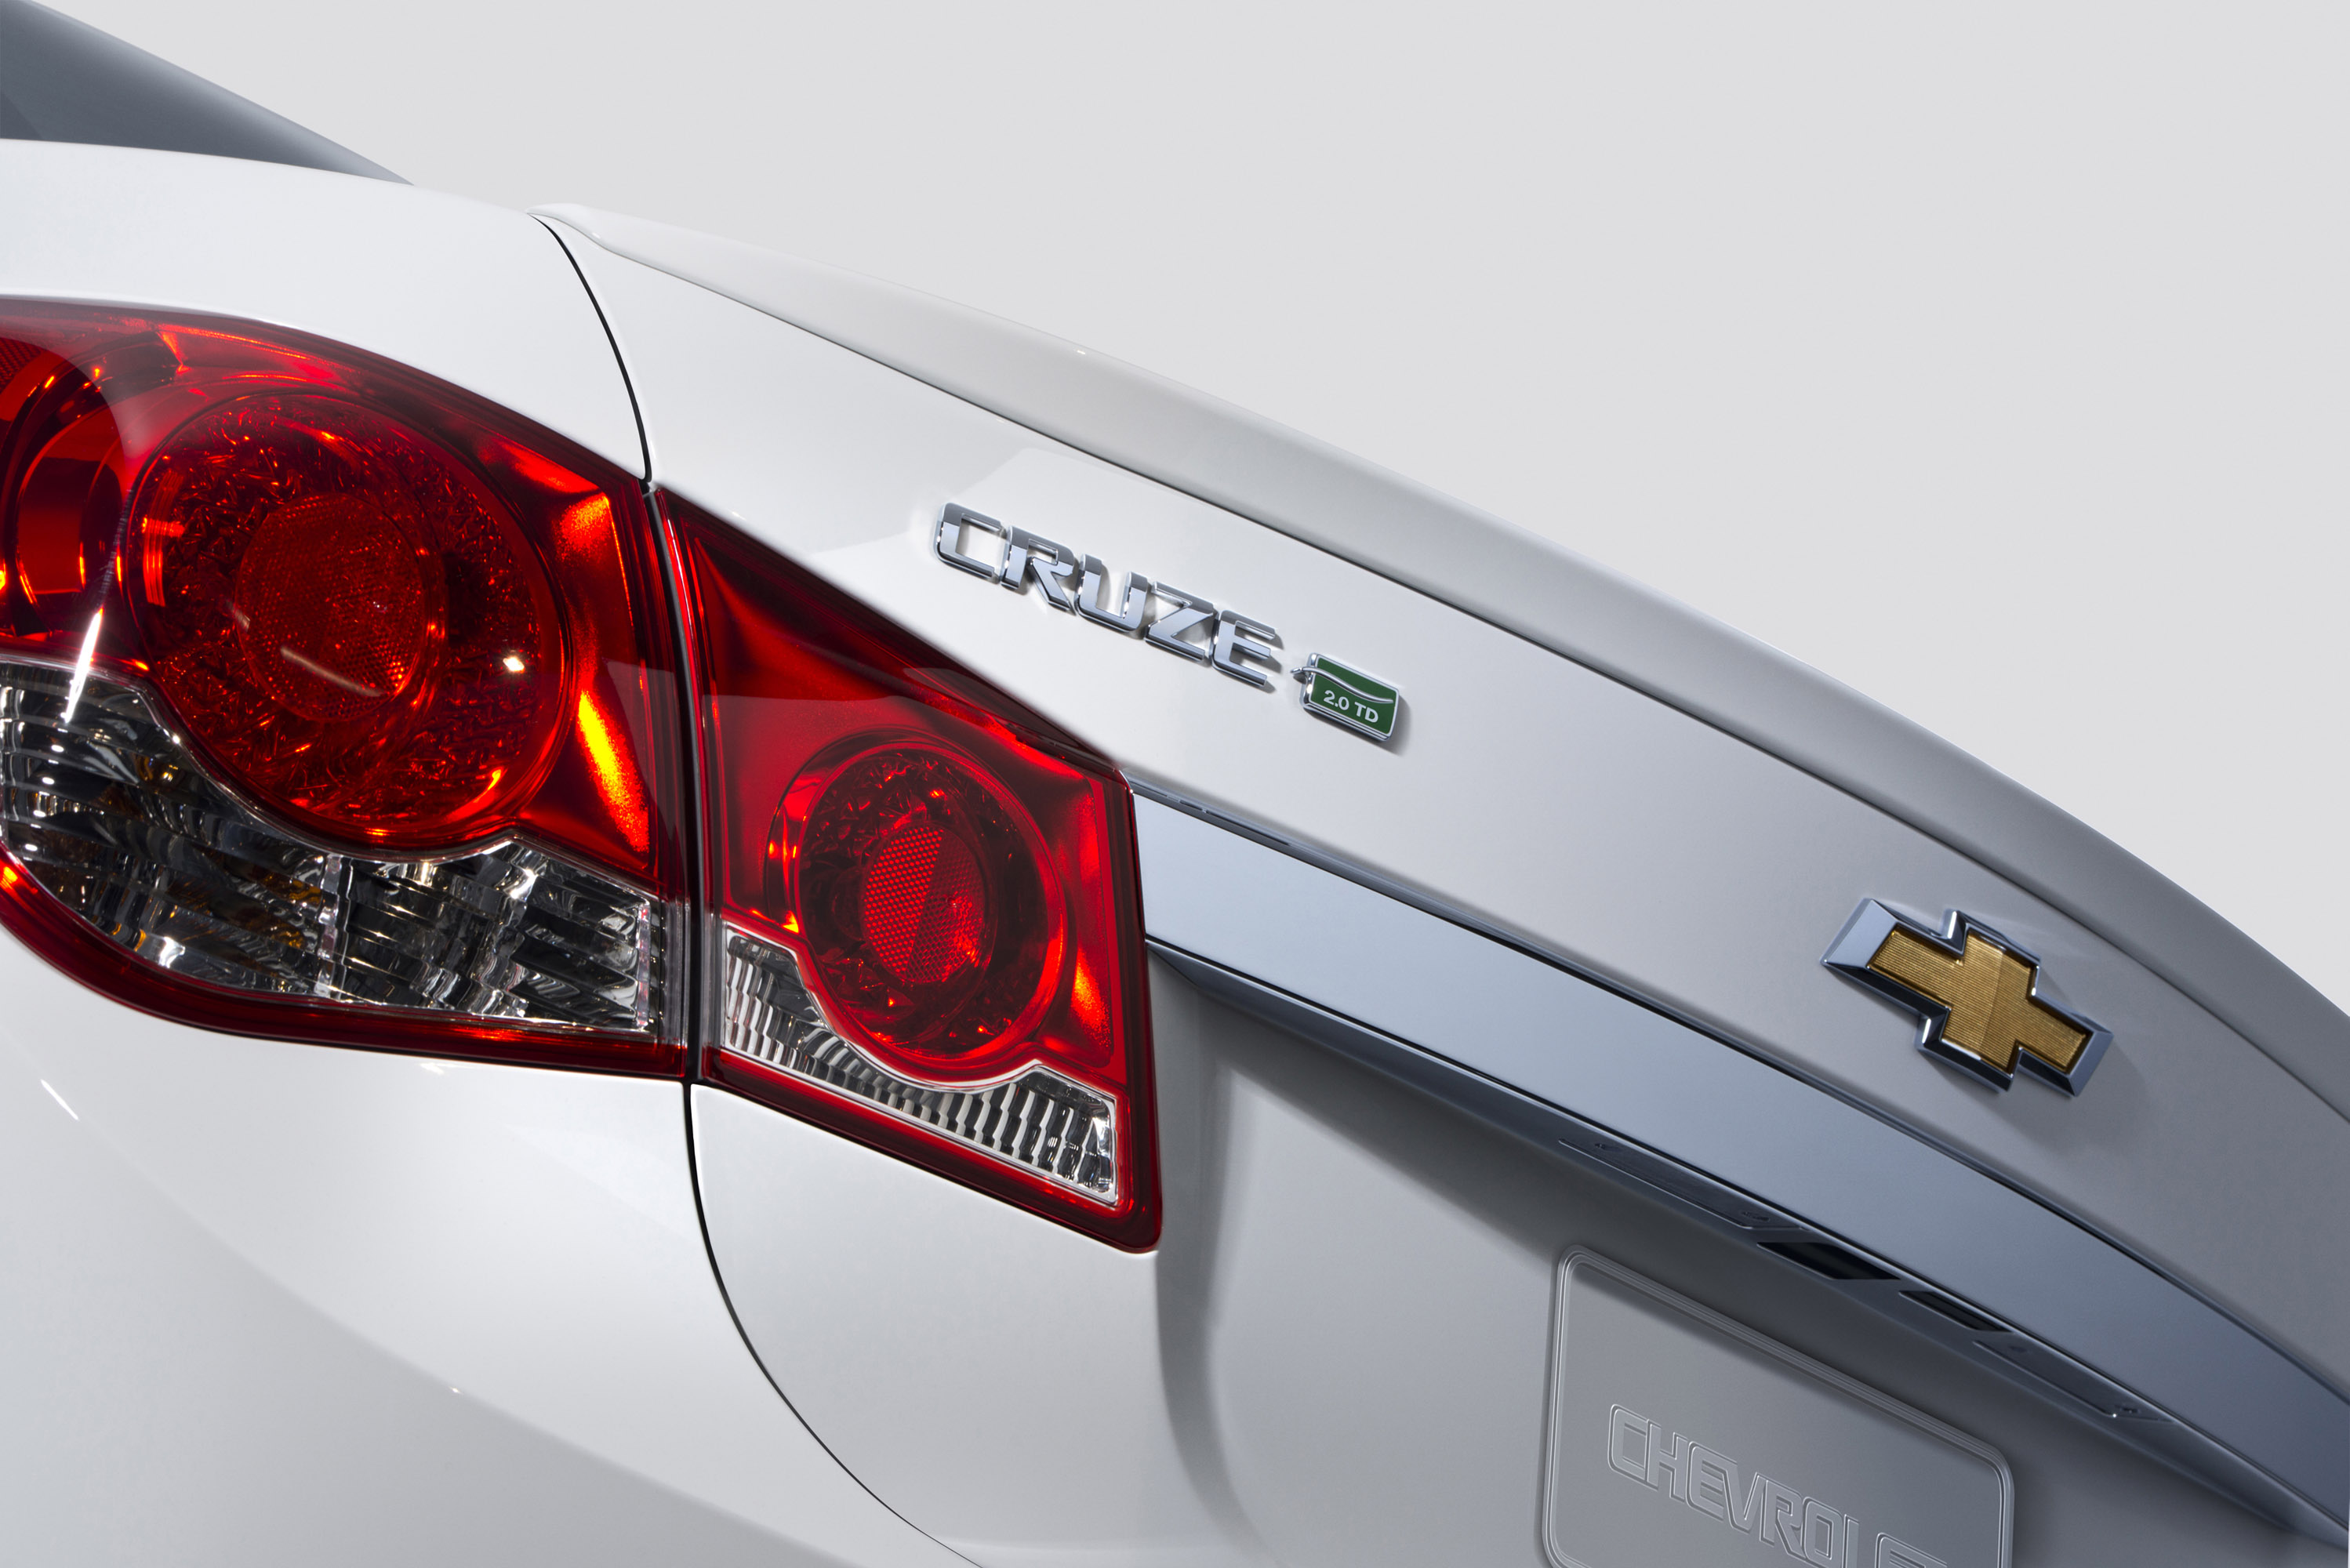 Chevrolet cruze diesel review